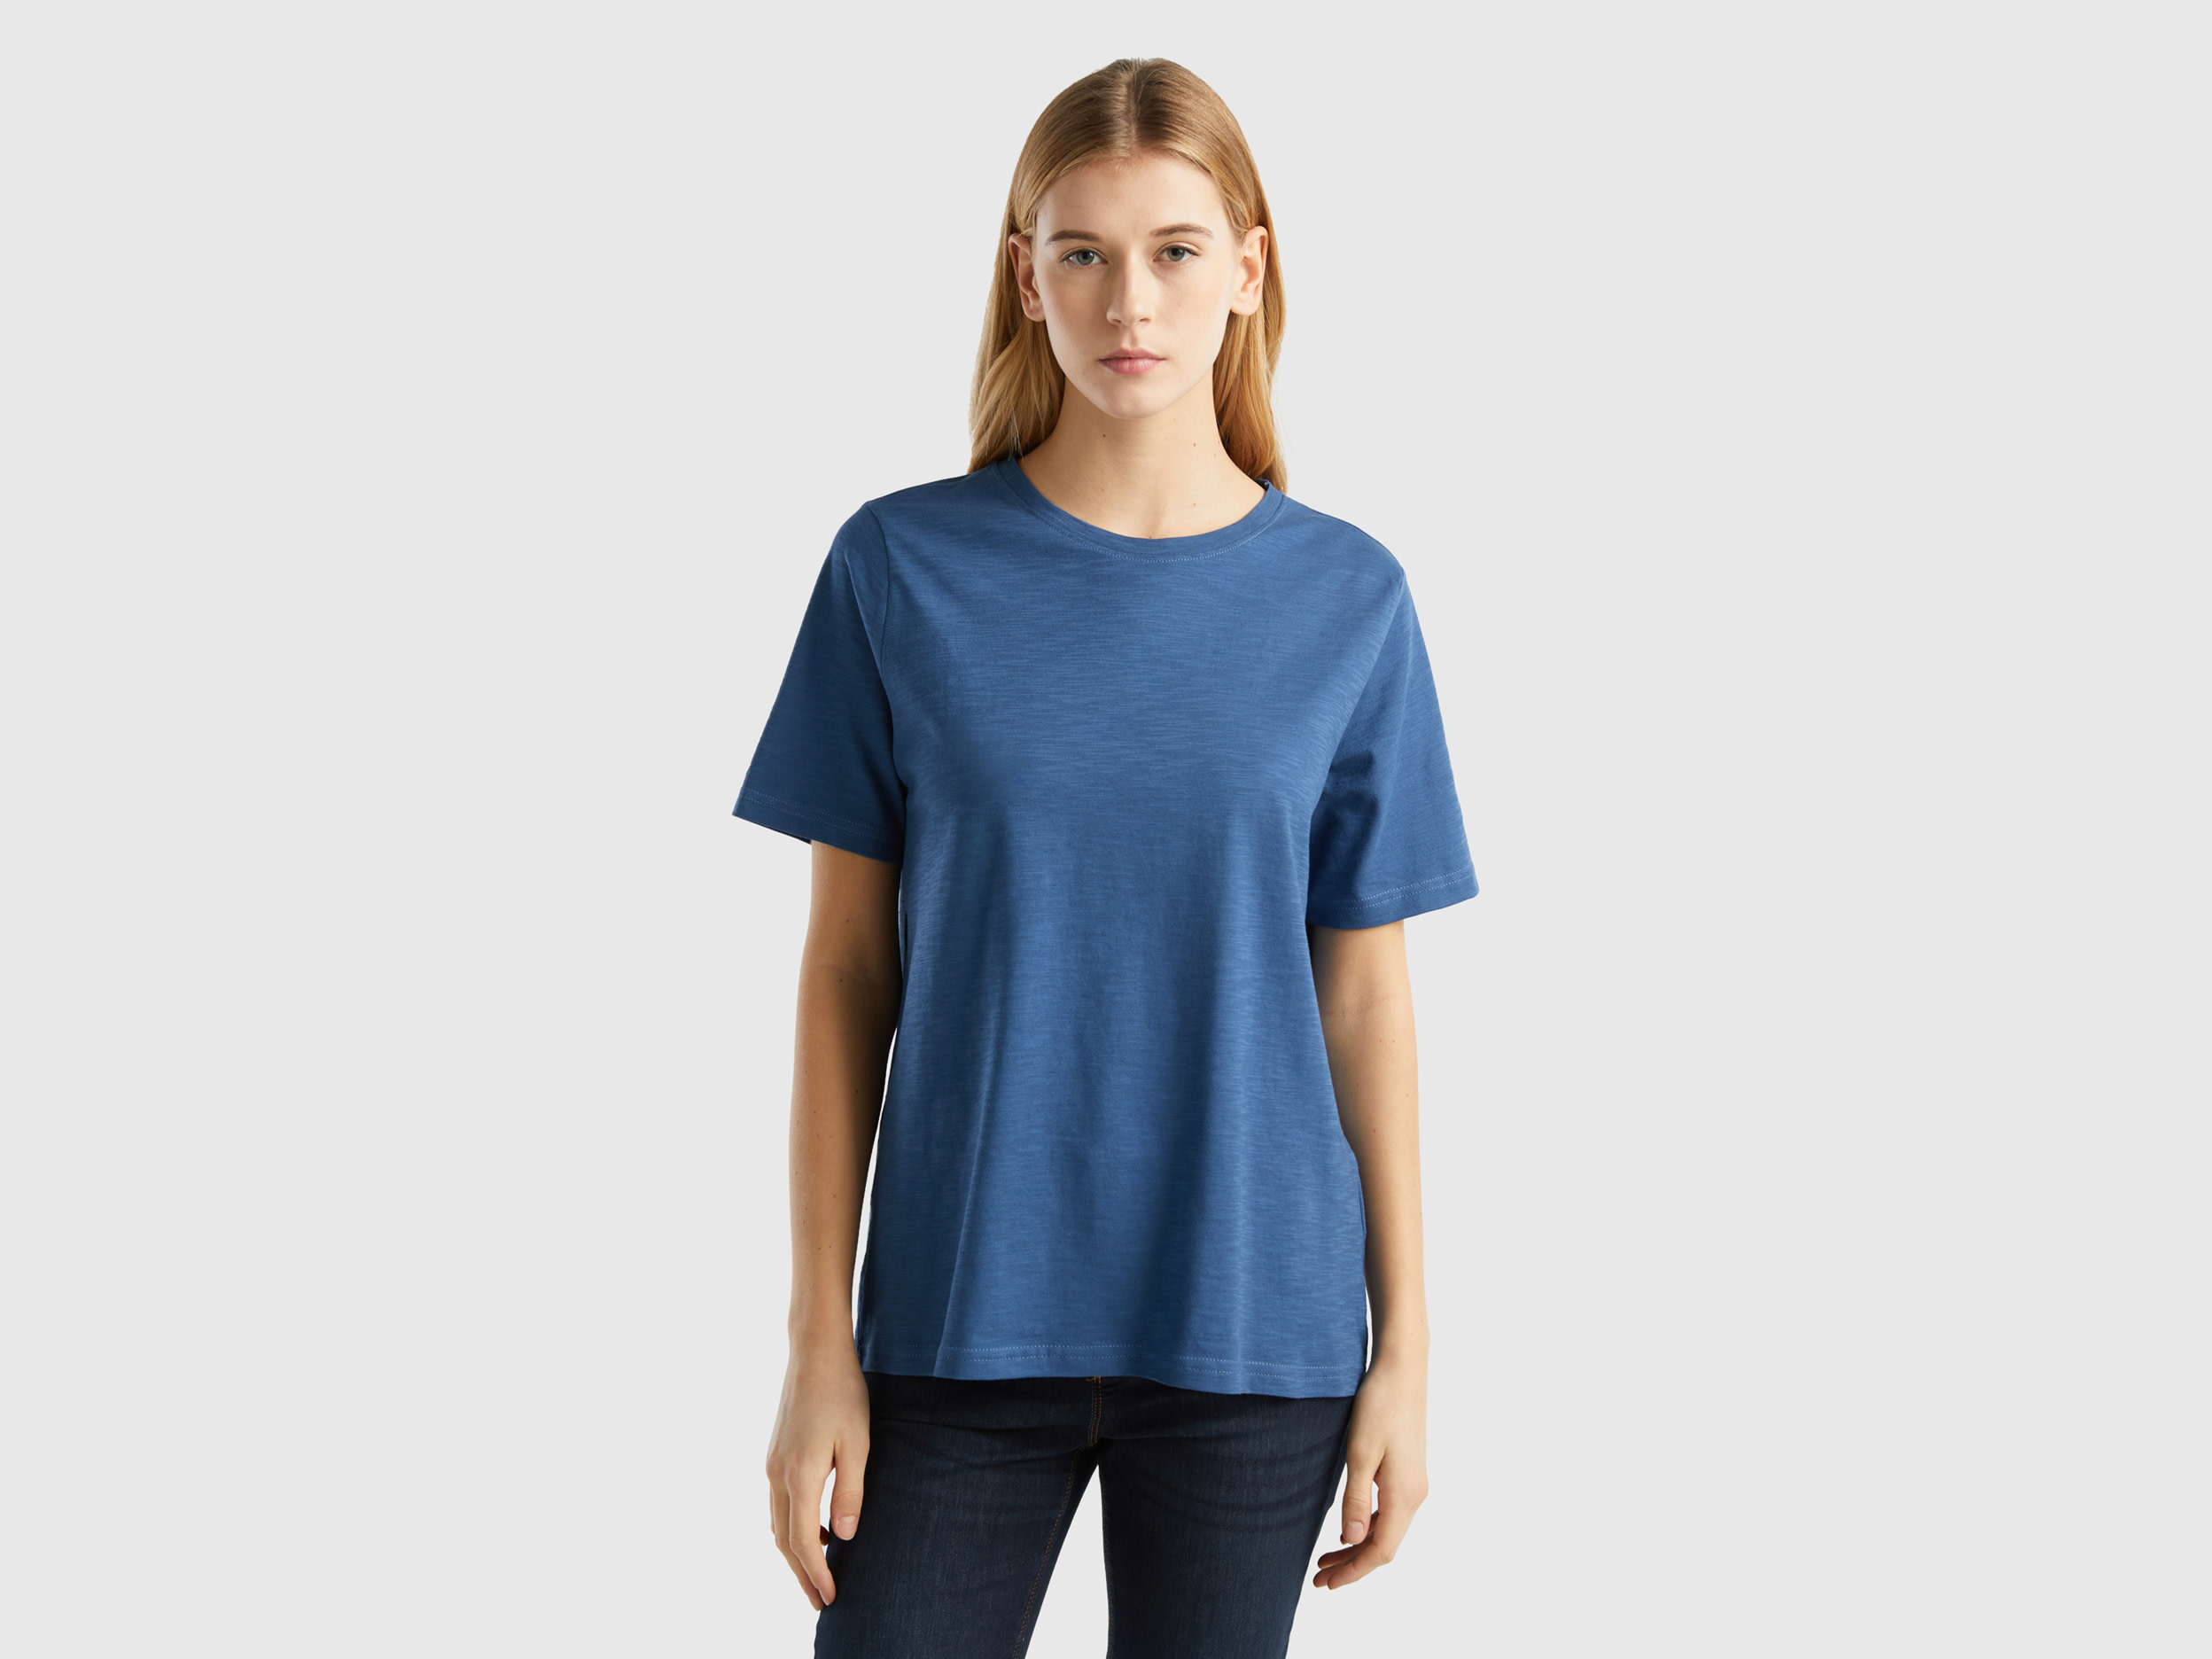 Benetton, Crew Neck T-shirt In Slub Cotton, size XXS, Air Force Blue, Women